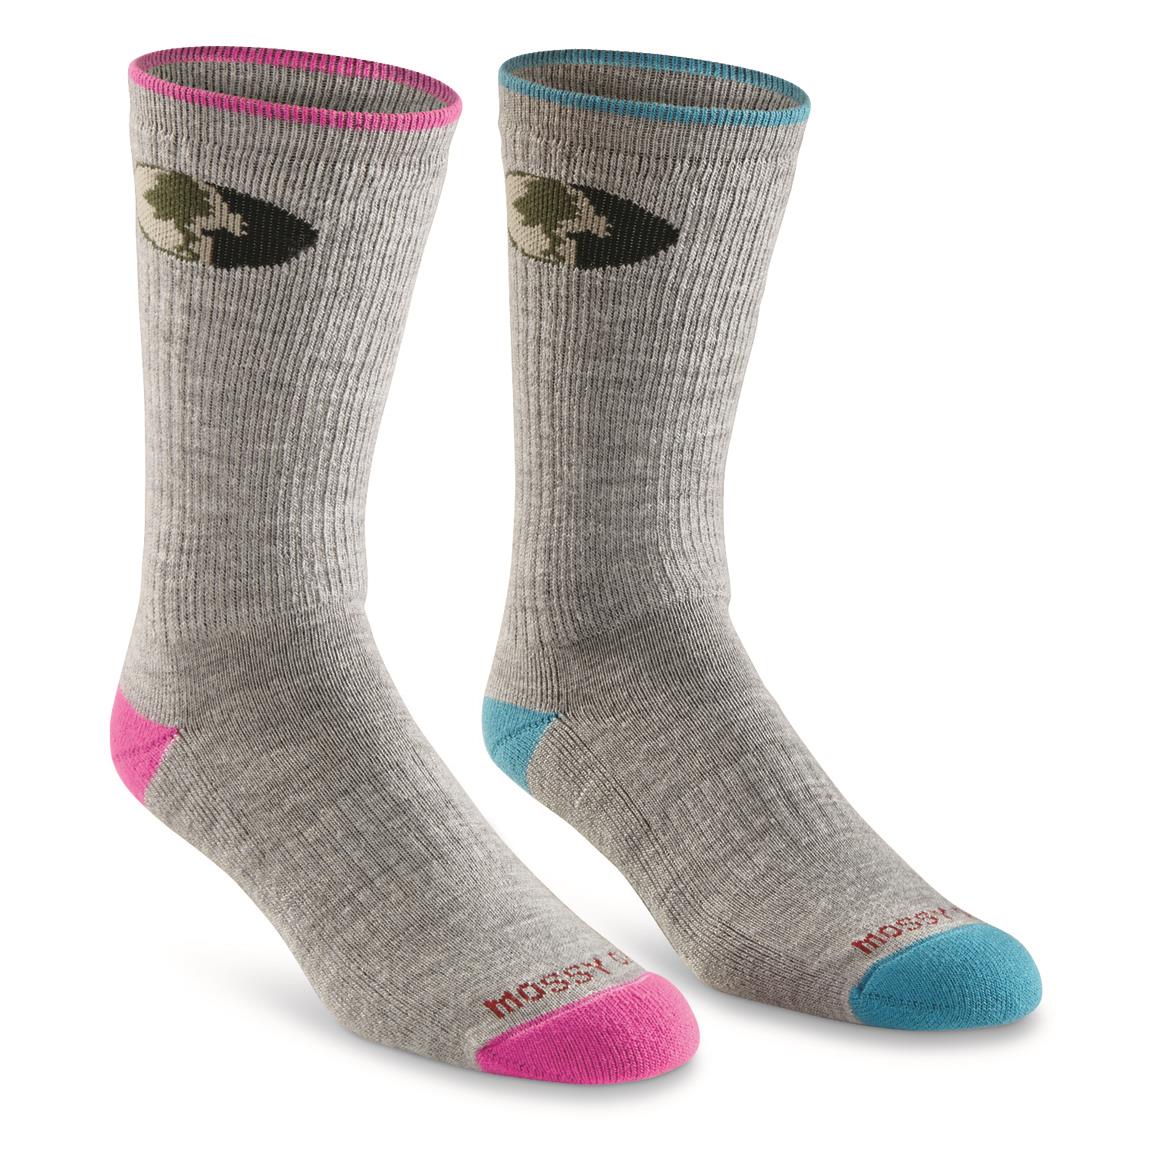 Women's Mossy Oak Boot Socks, 2 Pairs, Fuchsia/turquoise